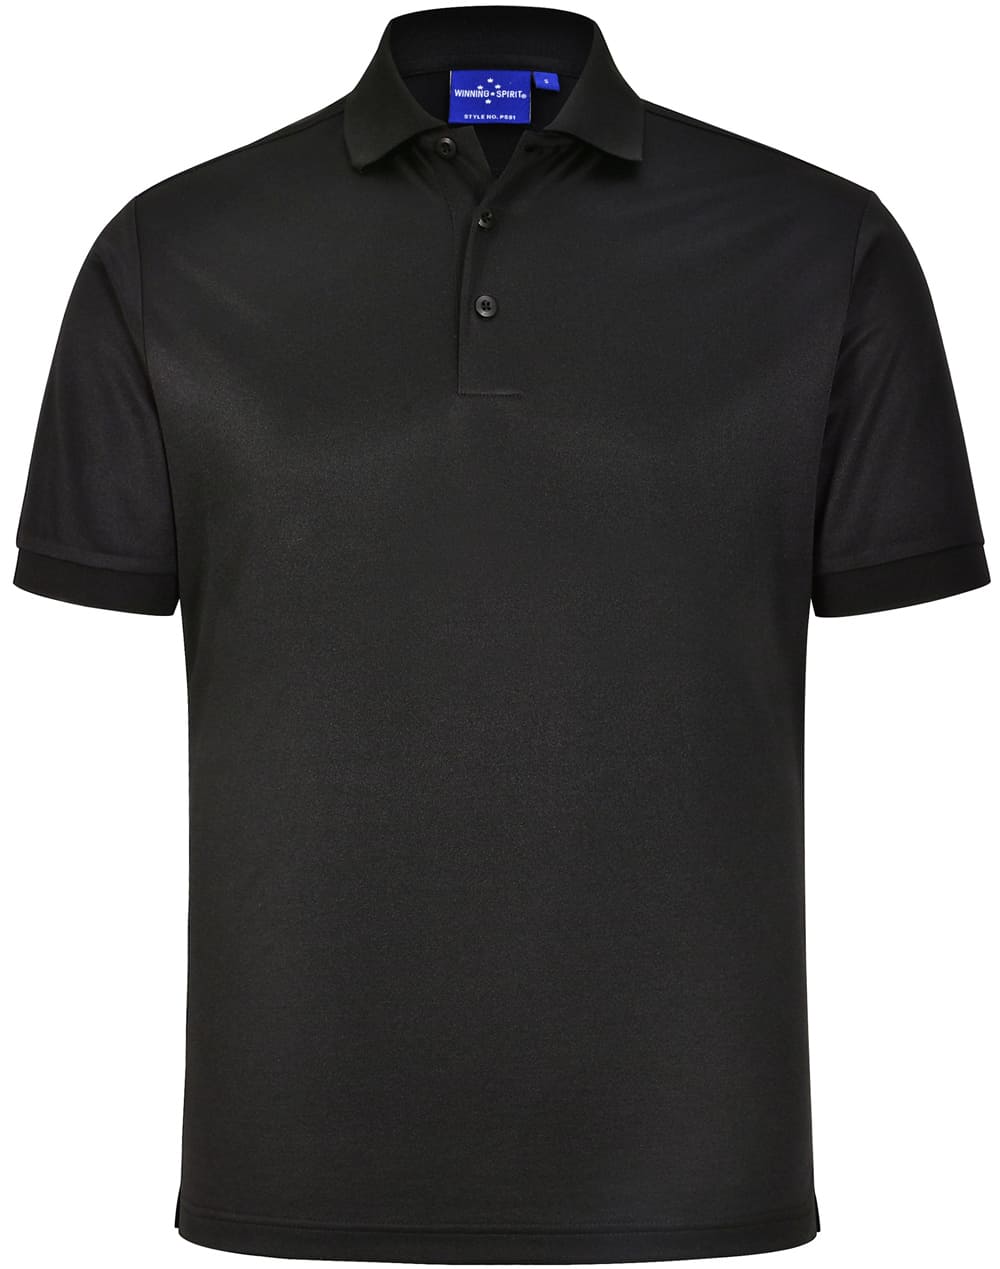 Custom Mens (Teal) Corporate Branded Polo Shirts Online Perth Australia